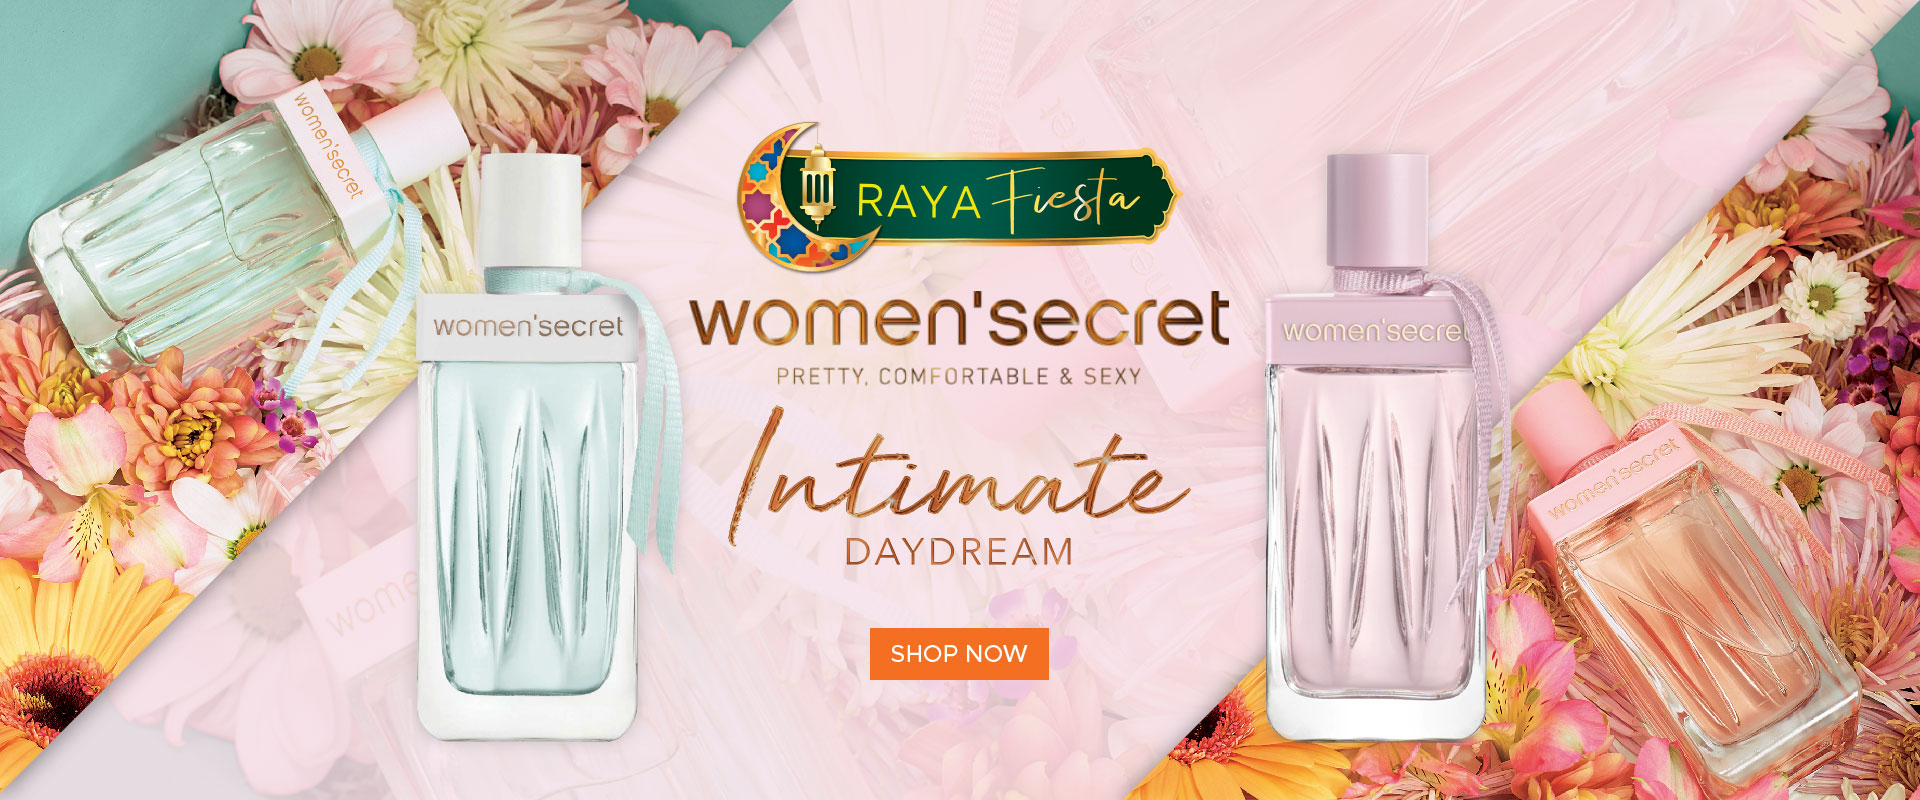 Raya Women'Secret